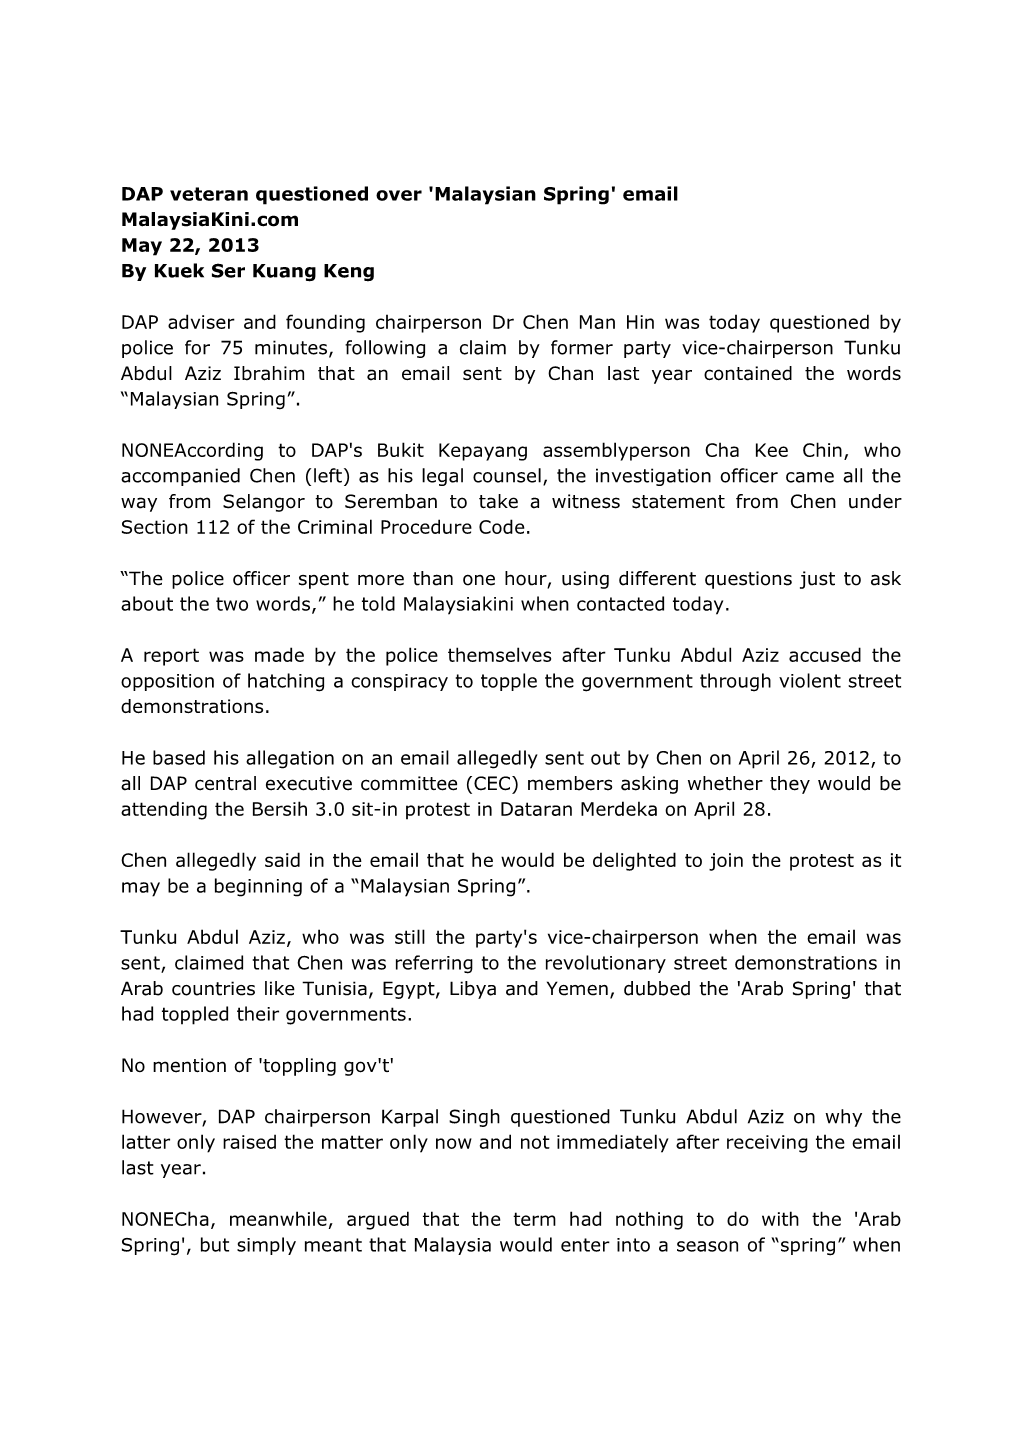 DAP Veteran Questioned Over 'Malaysian Spring' Email Malaysiakini.Com May 22, 2013 by Kuek Ser Kuang Keng DAP Adviser and Foundi